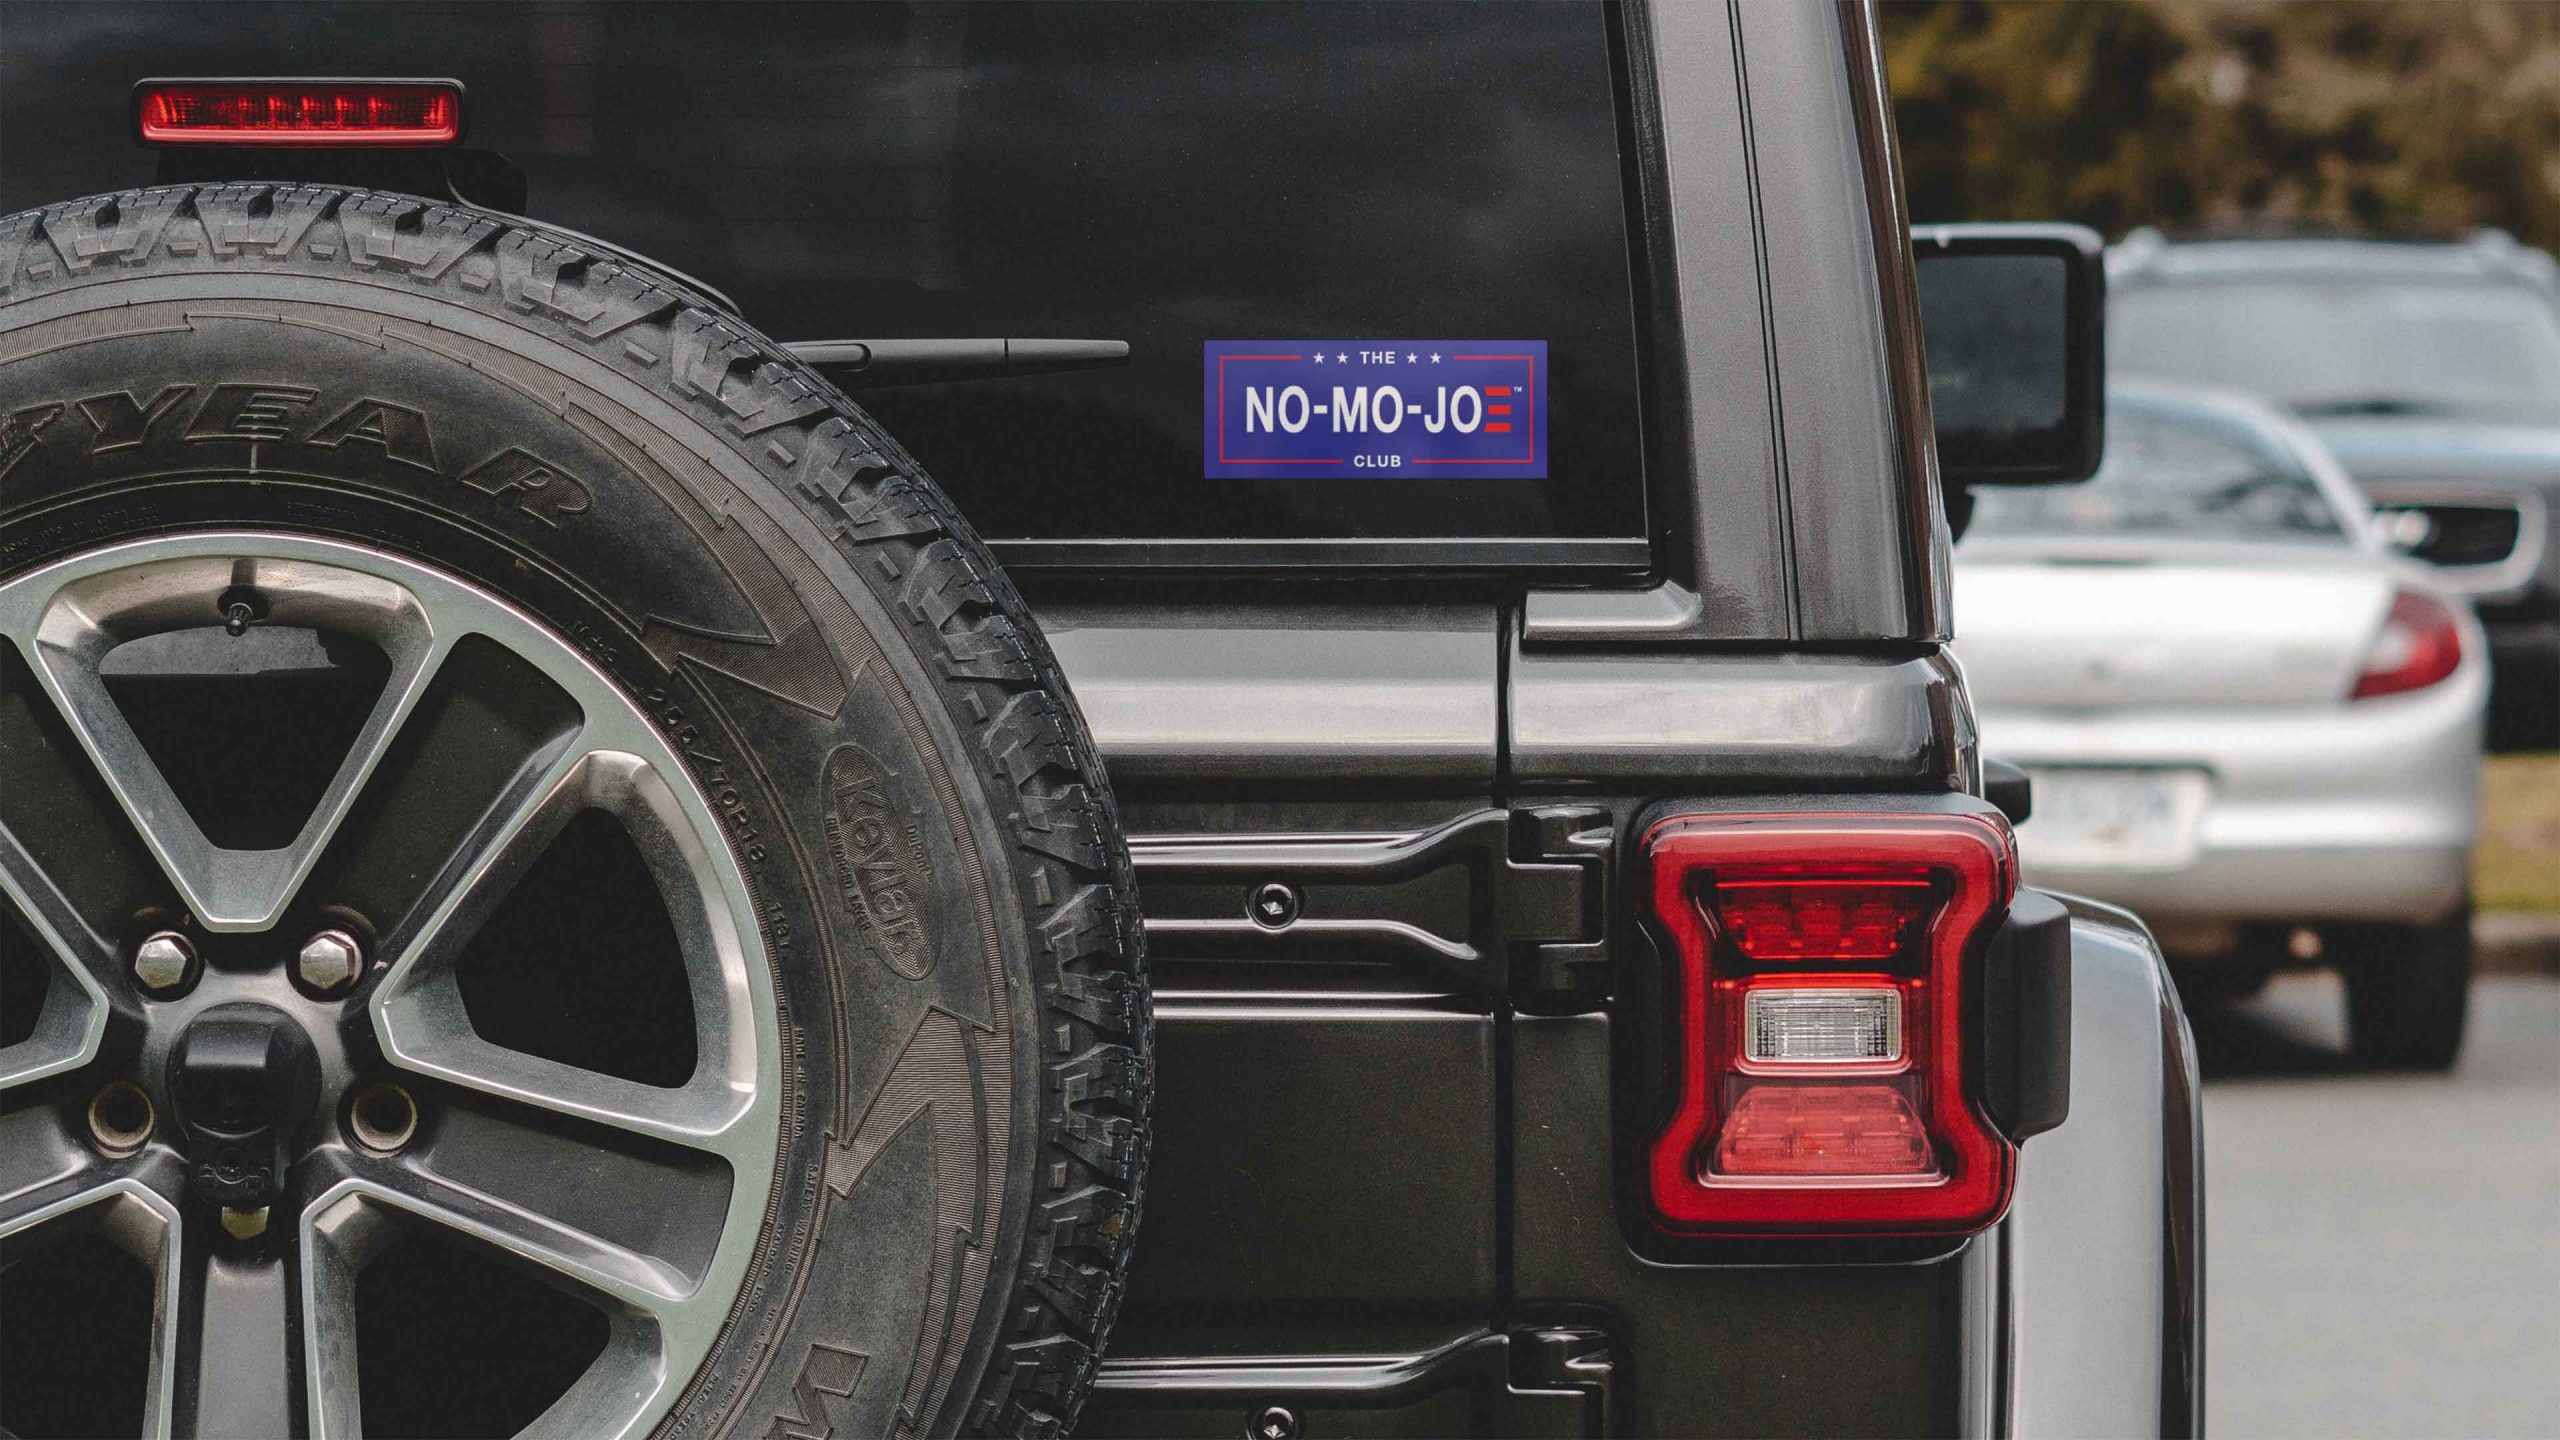 The No-Mo-Joe Club™ window cling on back window of black jeep in parking lot.